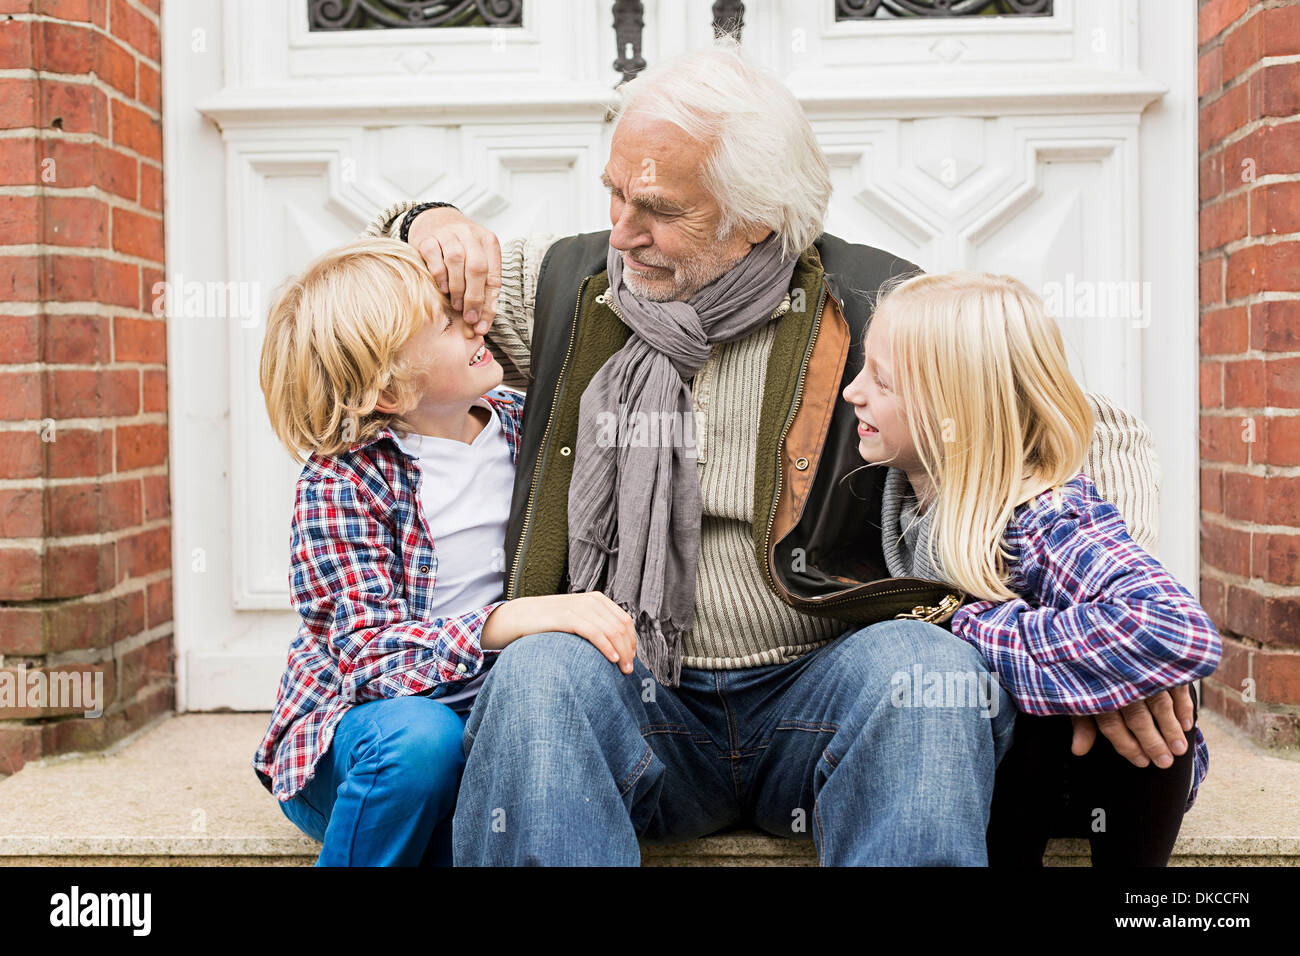 Grandfather sitting with grandchildren on front doorstep Stock Photo